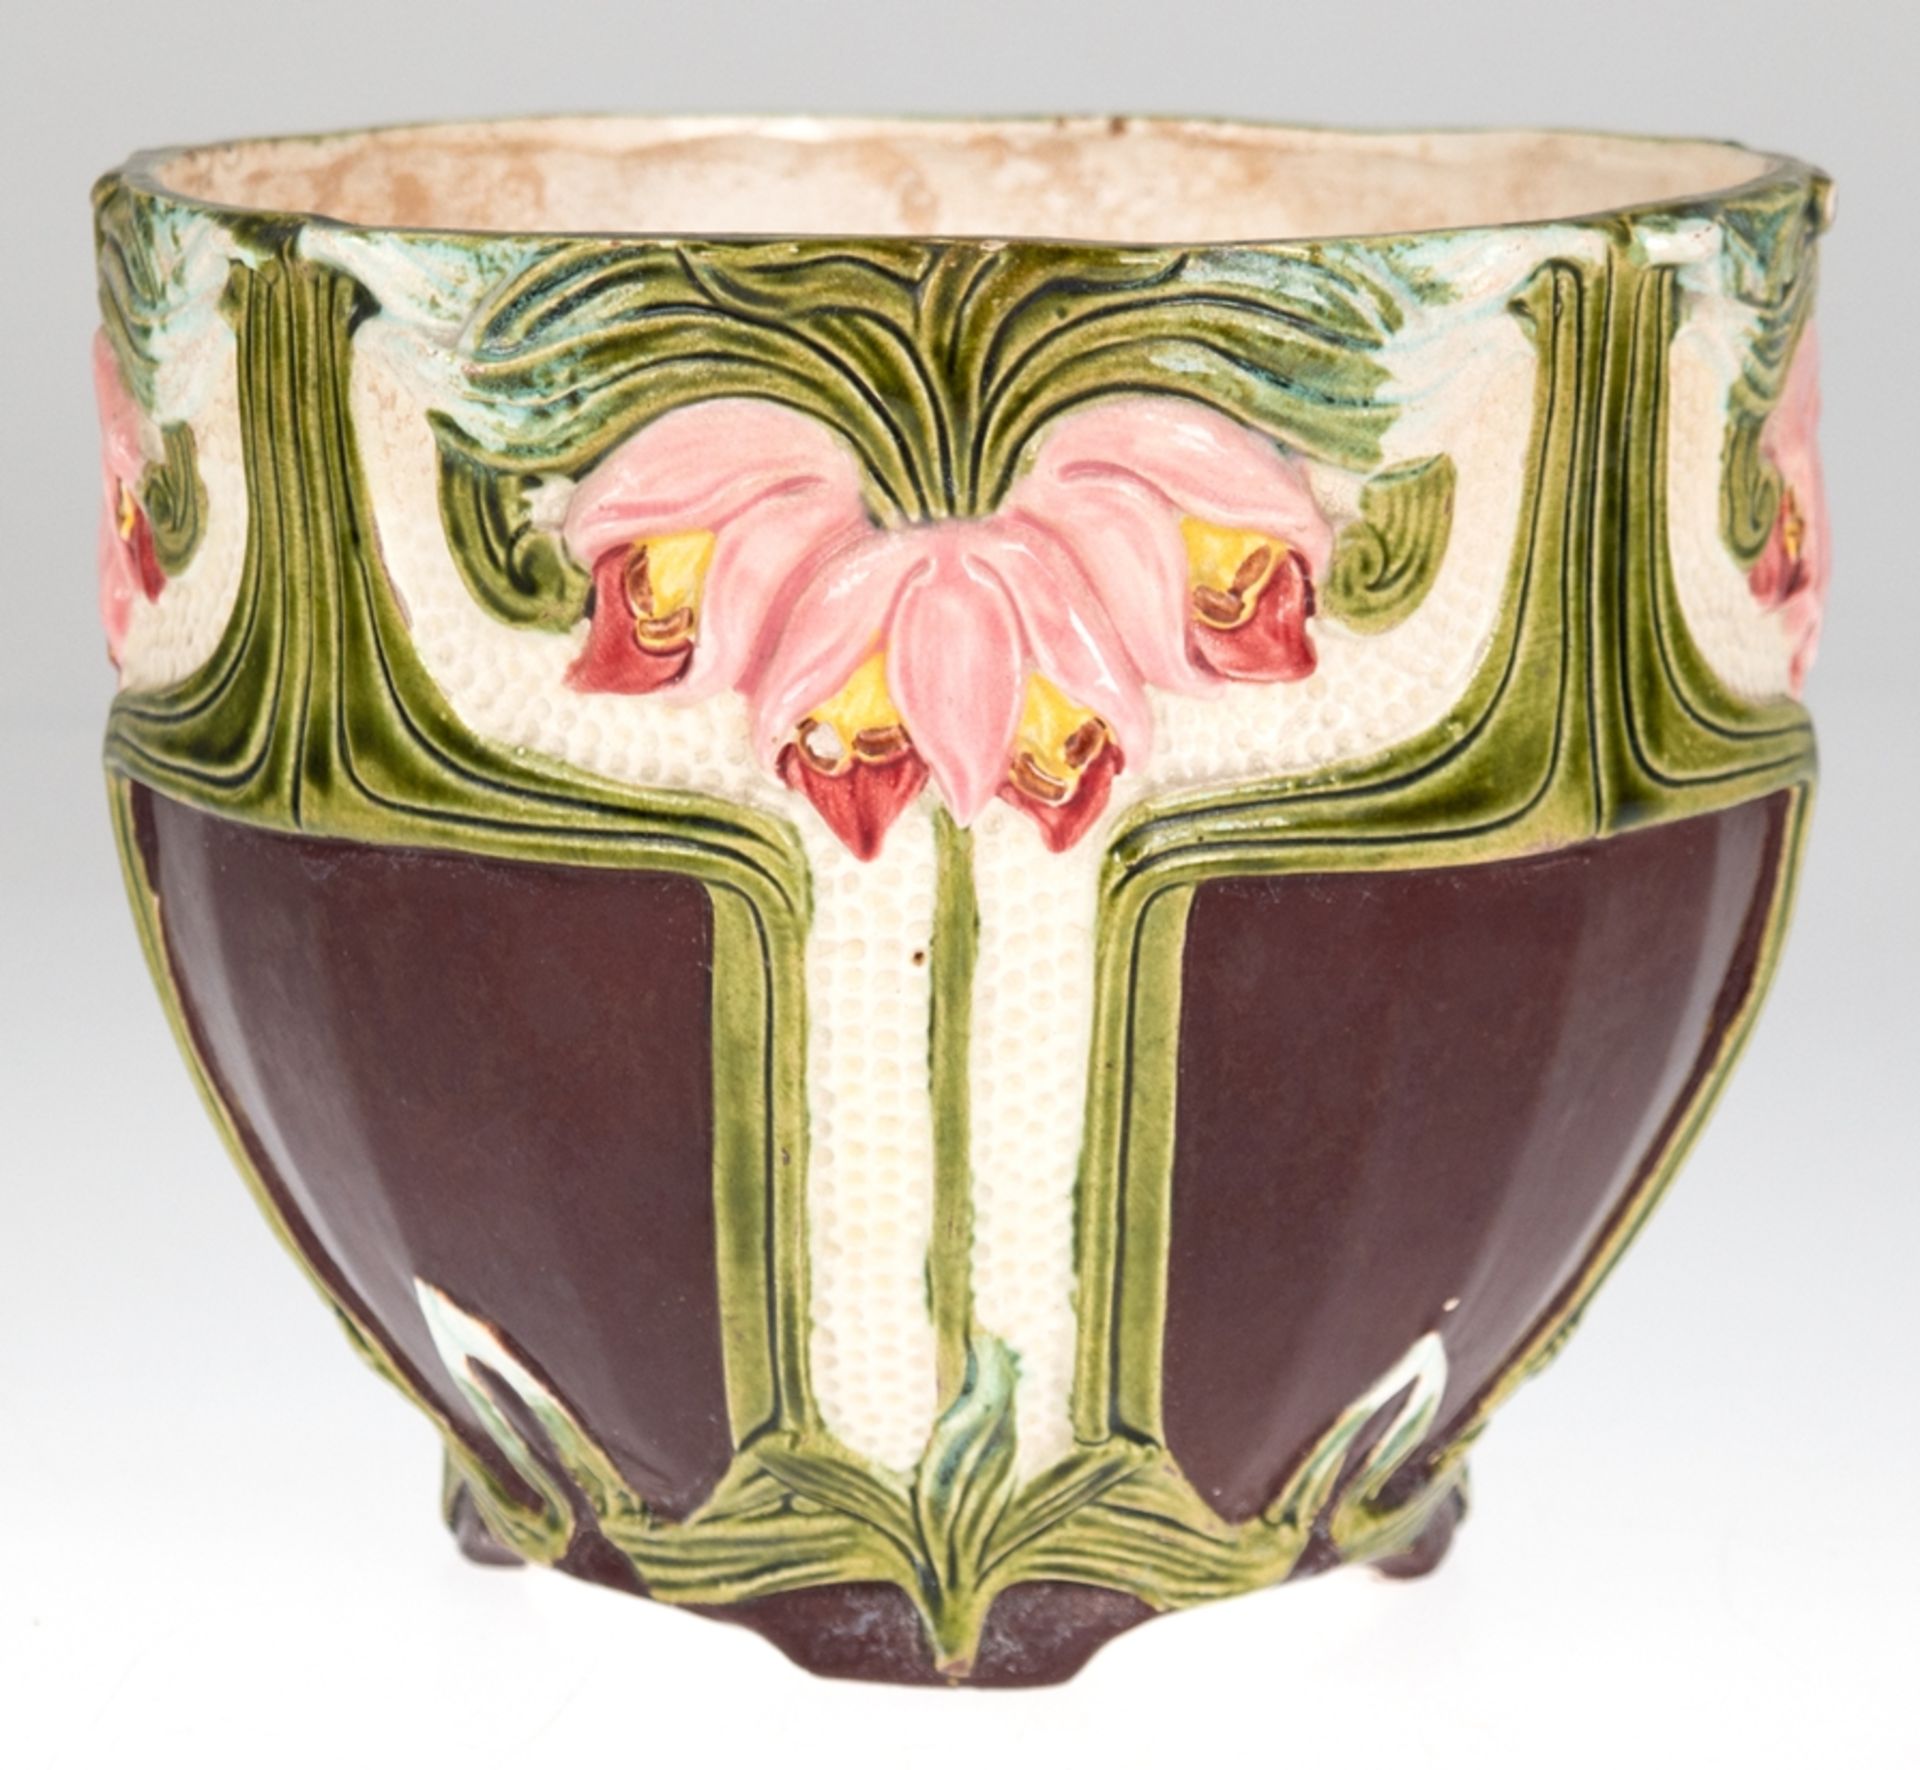 Jugendstil-Übertopf, Keramik, polychrom floral und ornamental glasiert, Haarrisse, H. 17,5 cm, Inne